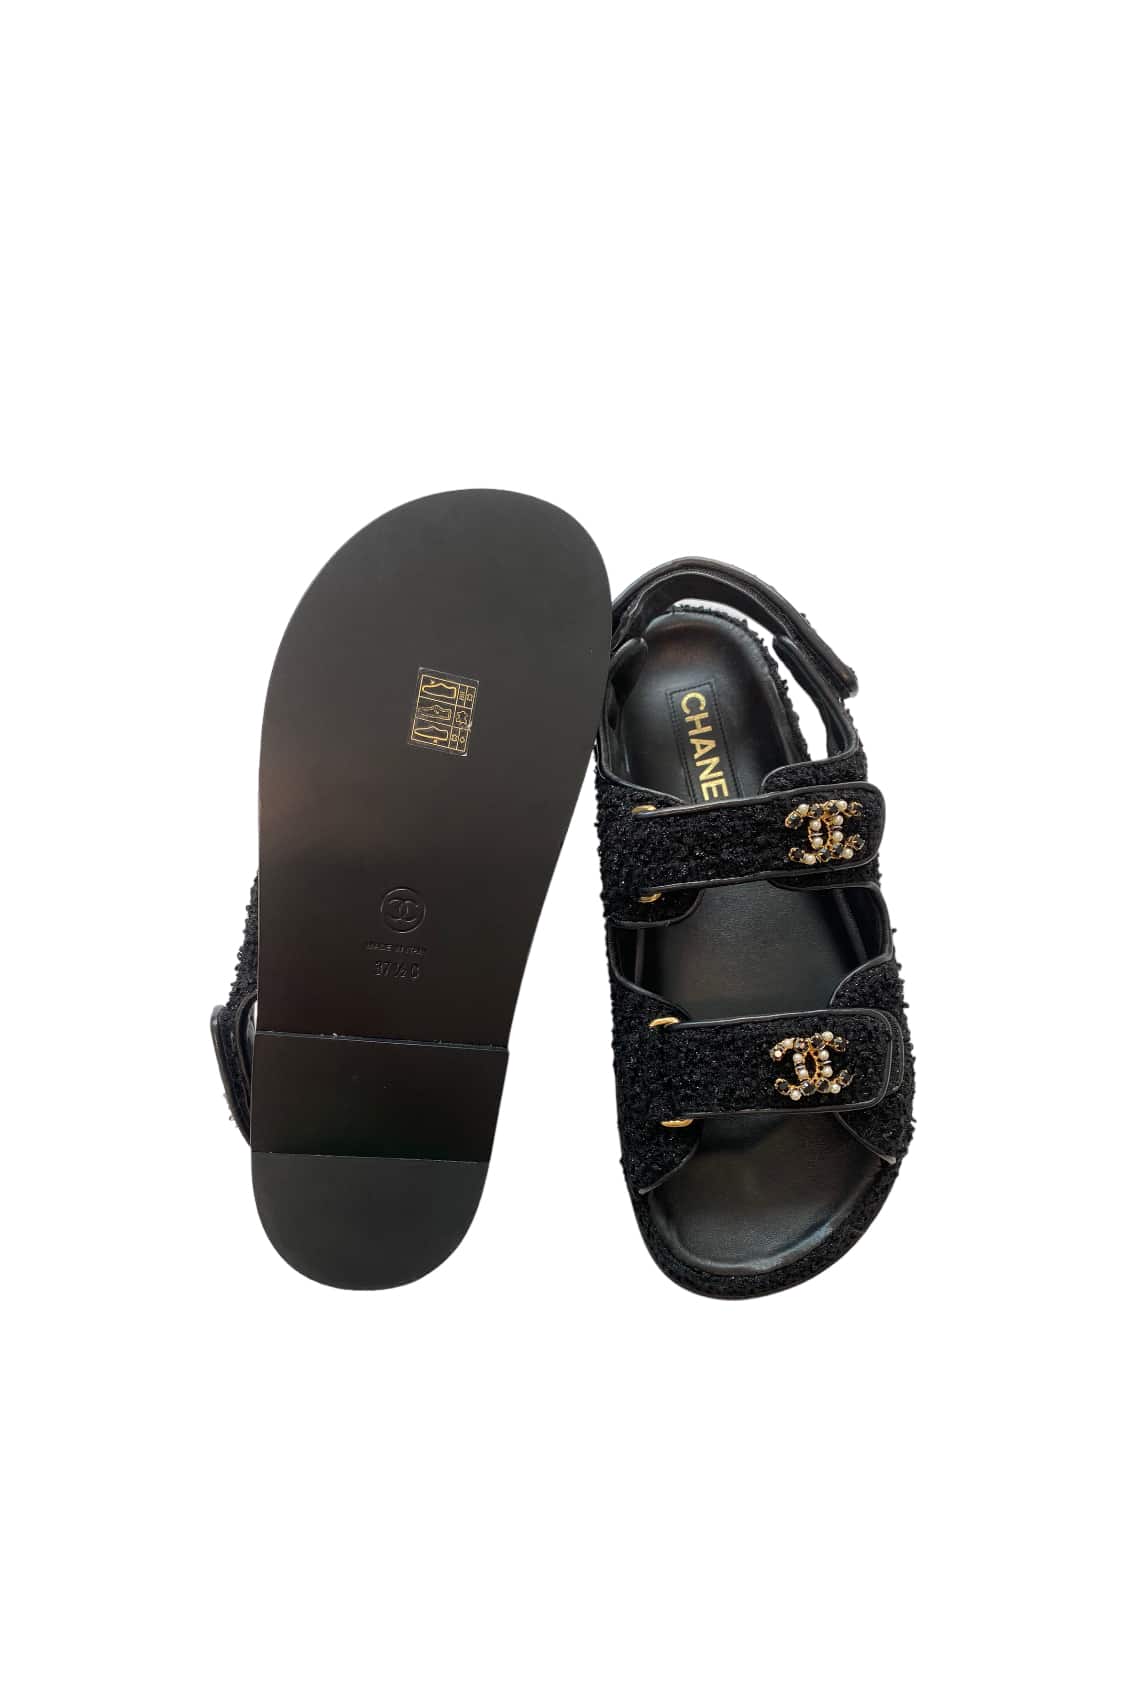 Chanel black tweed size 37.5 EU sandals - The Luxury Flavor